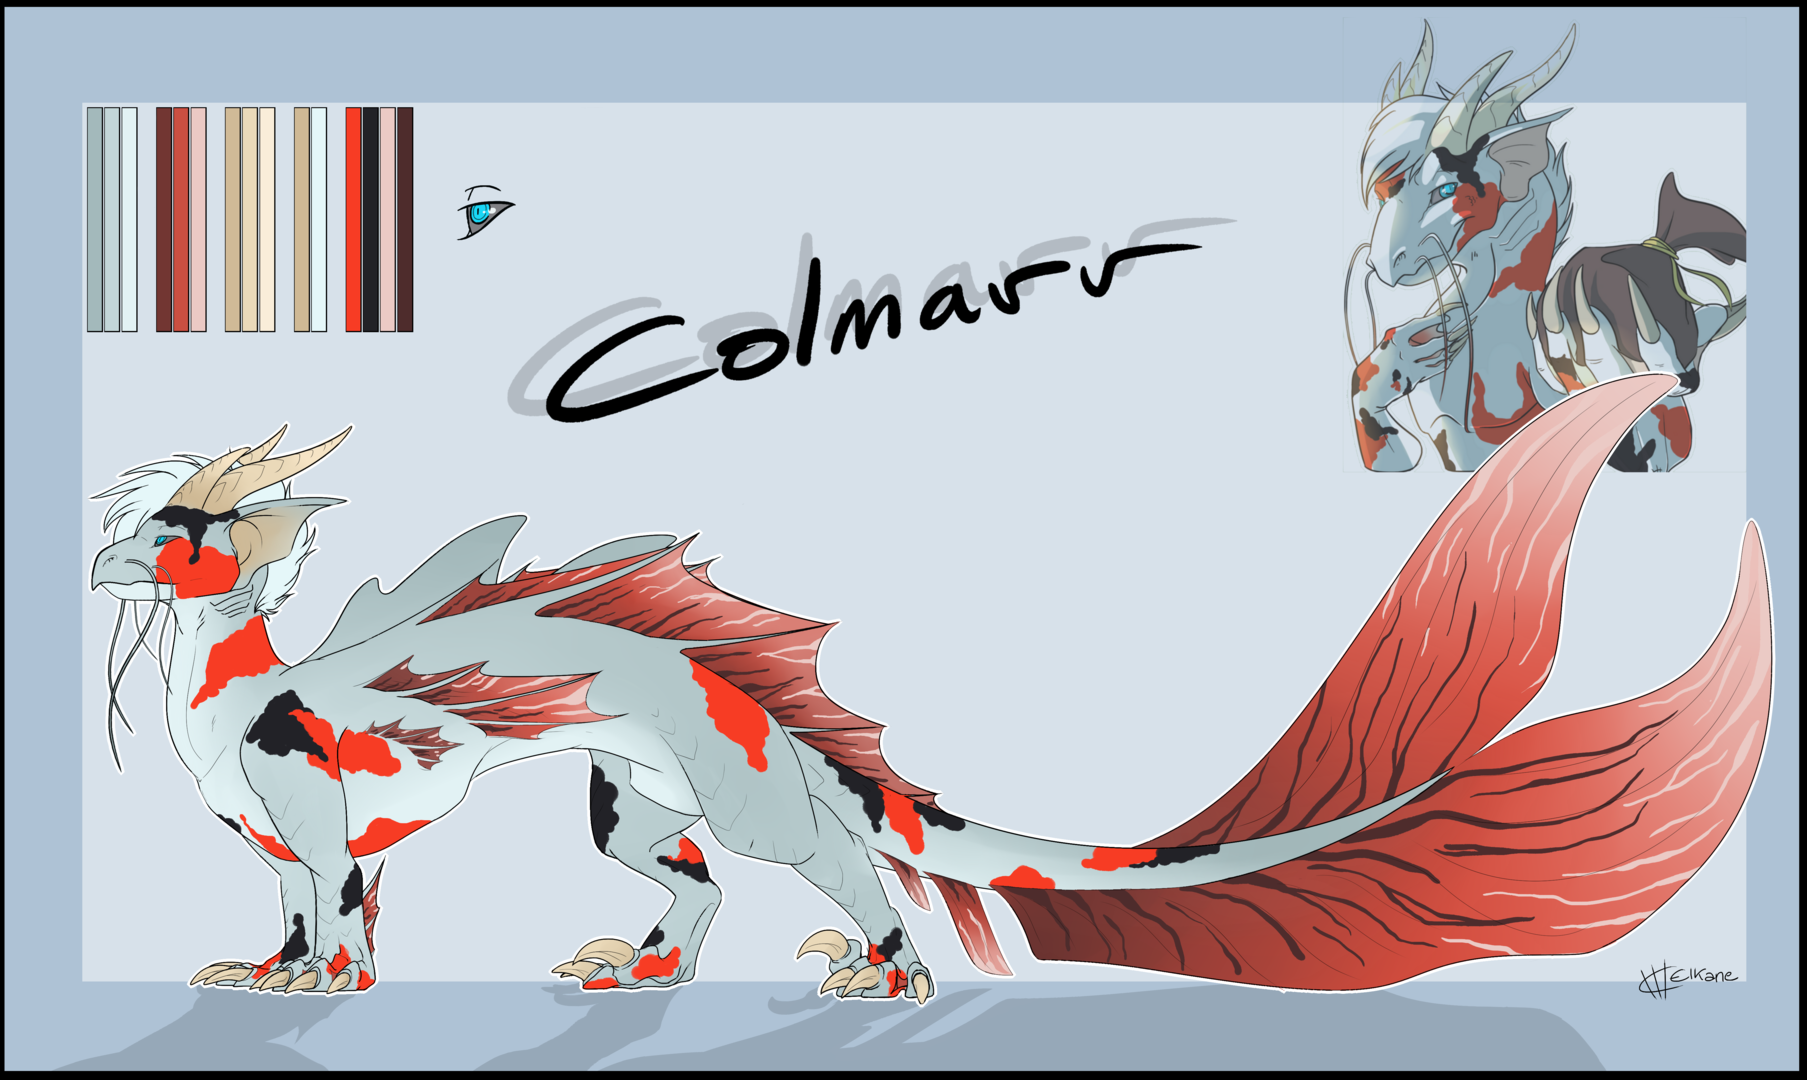 Colmarr